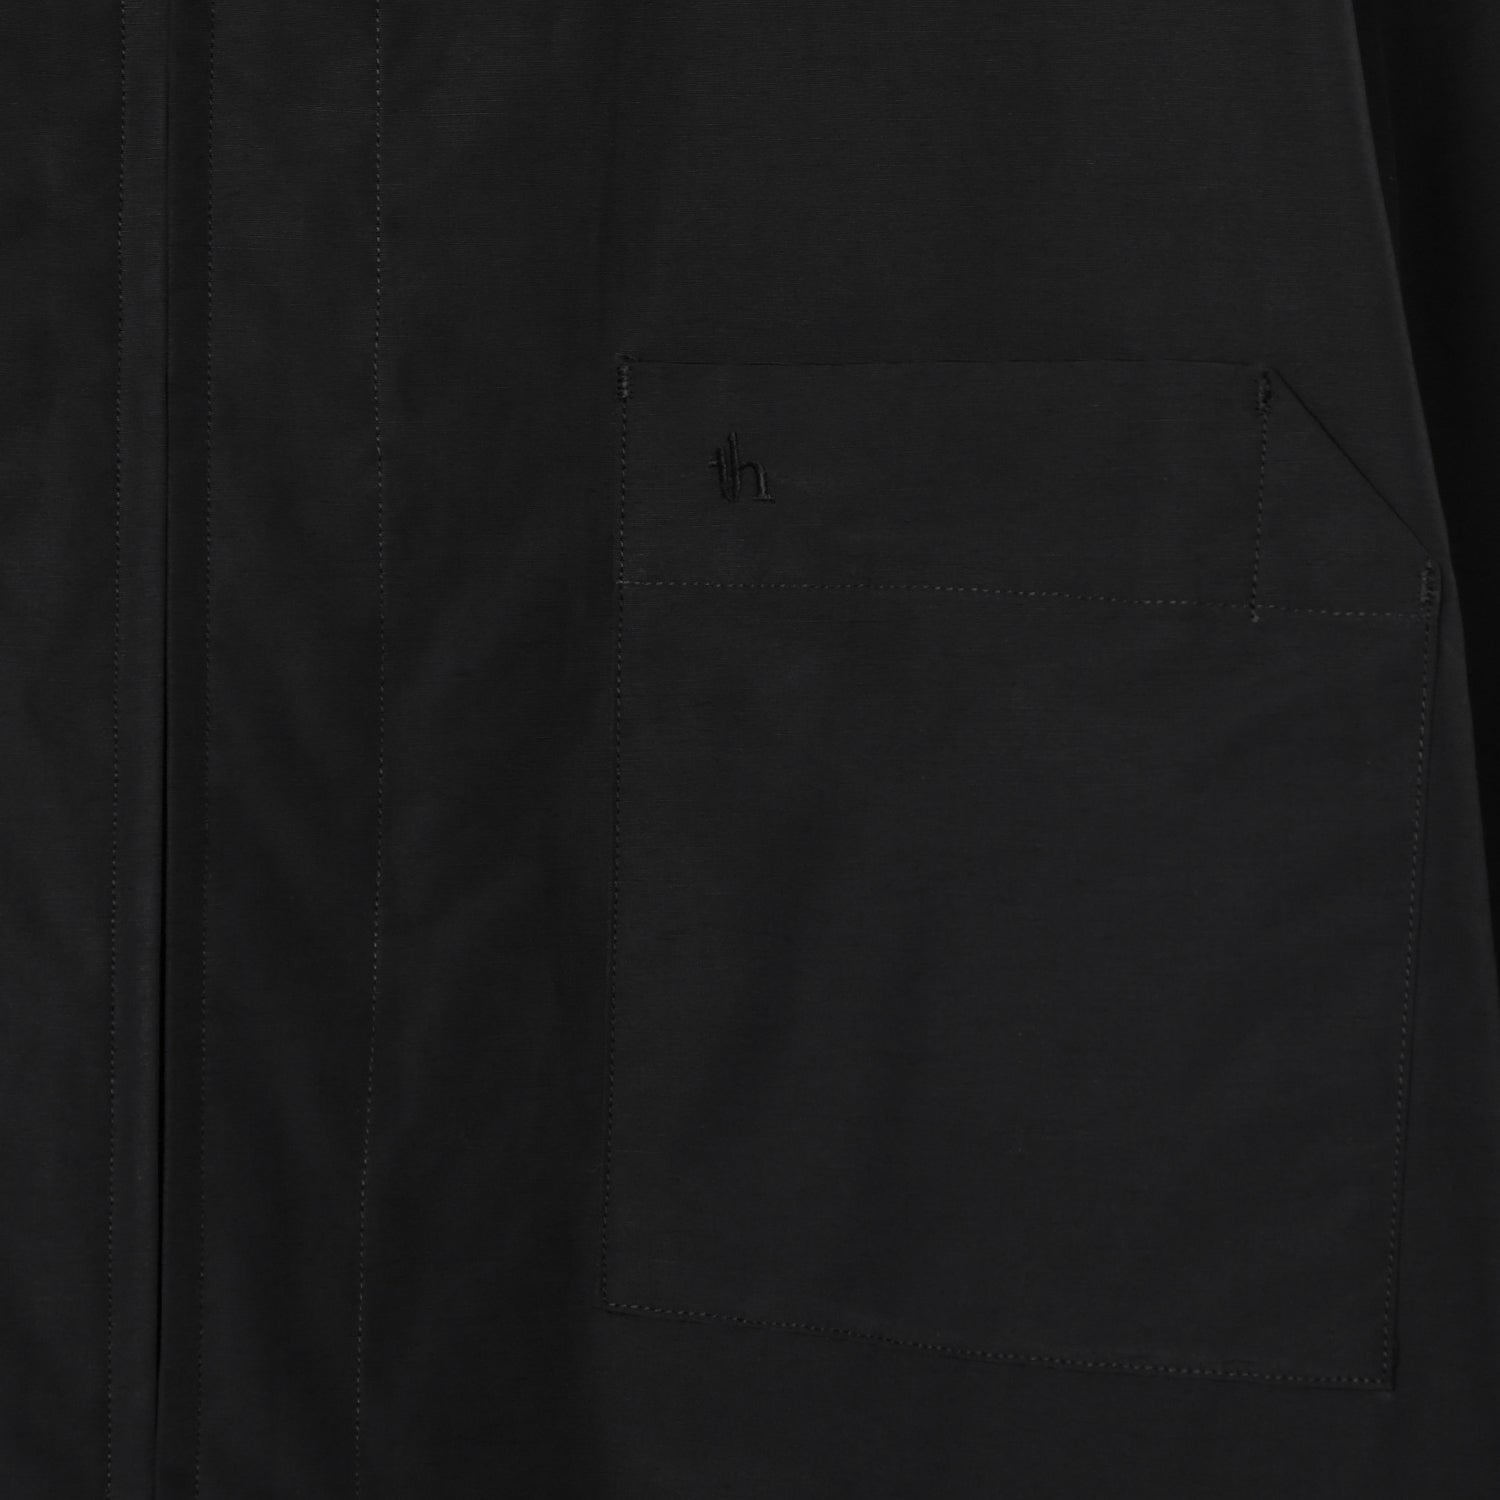 Midsize L/S Zip Shirt / black